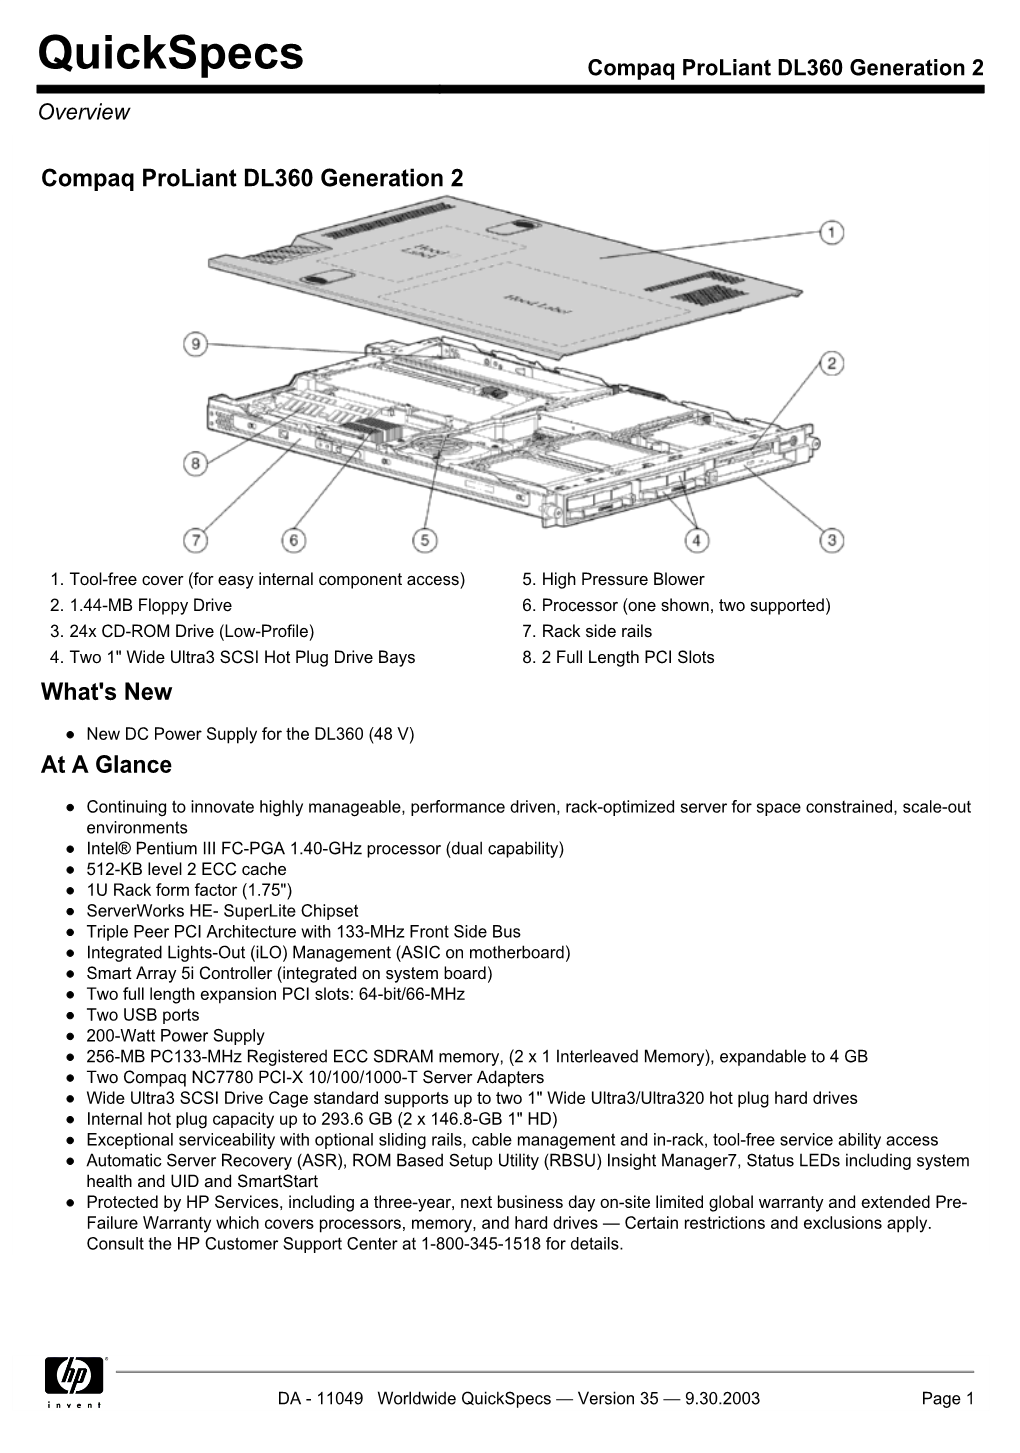 Compaq Proliant DL360 Generation 2 Overview